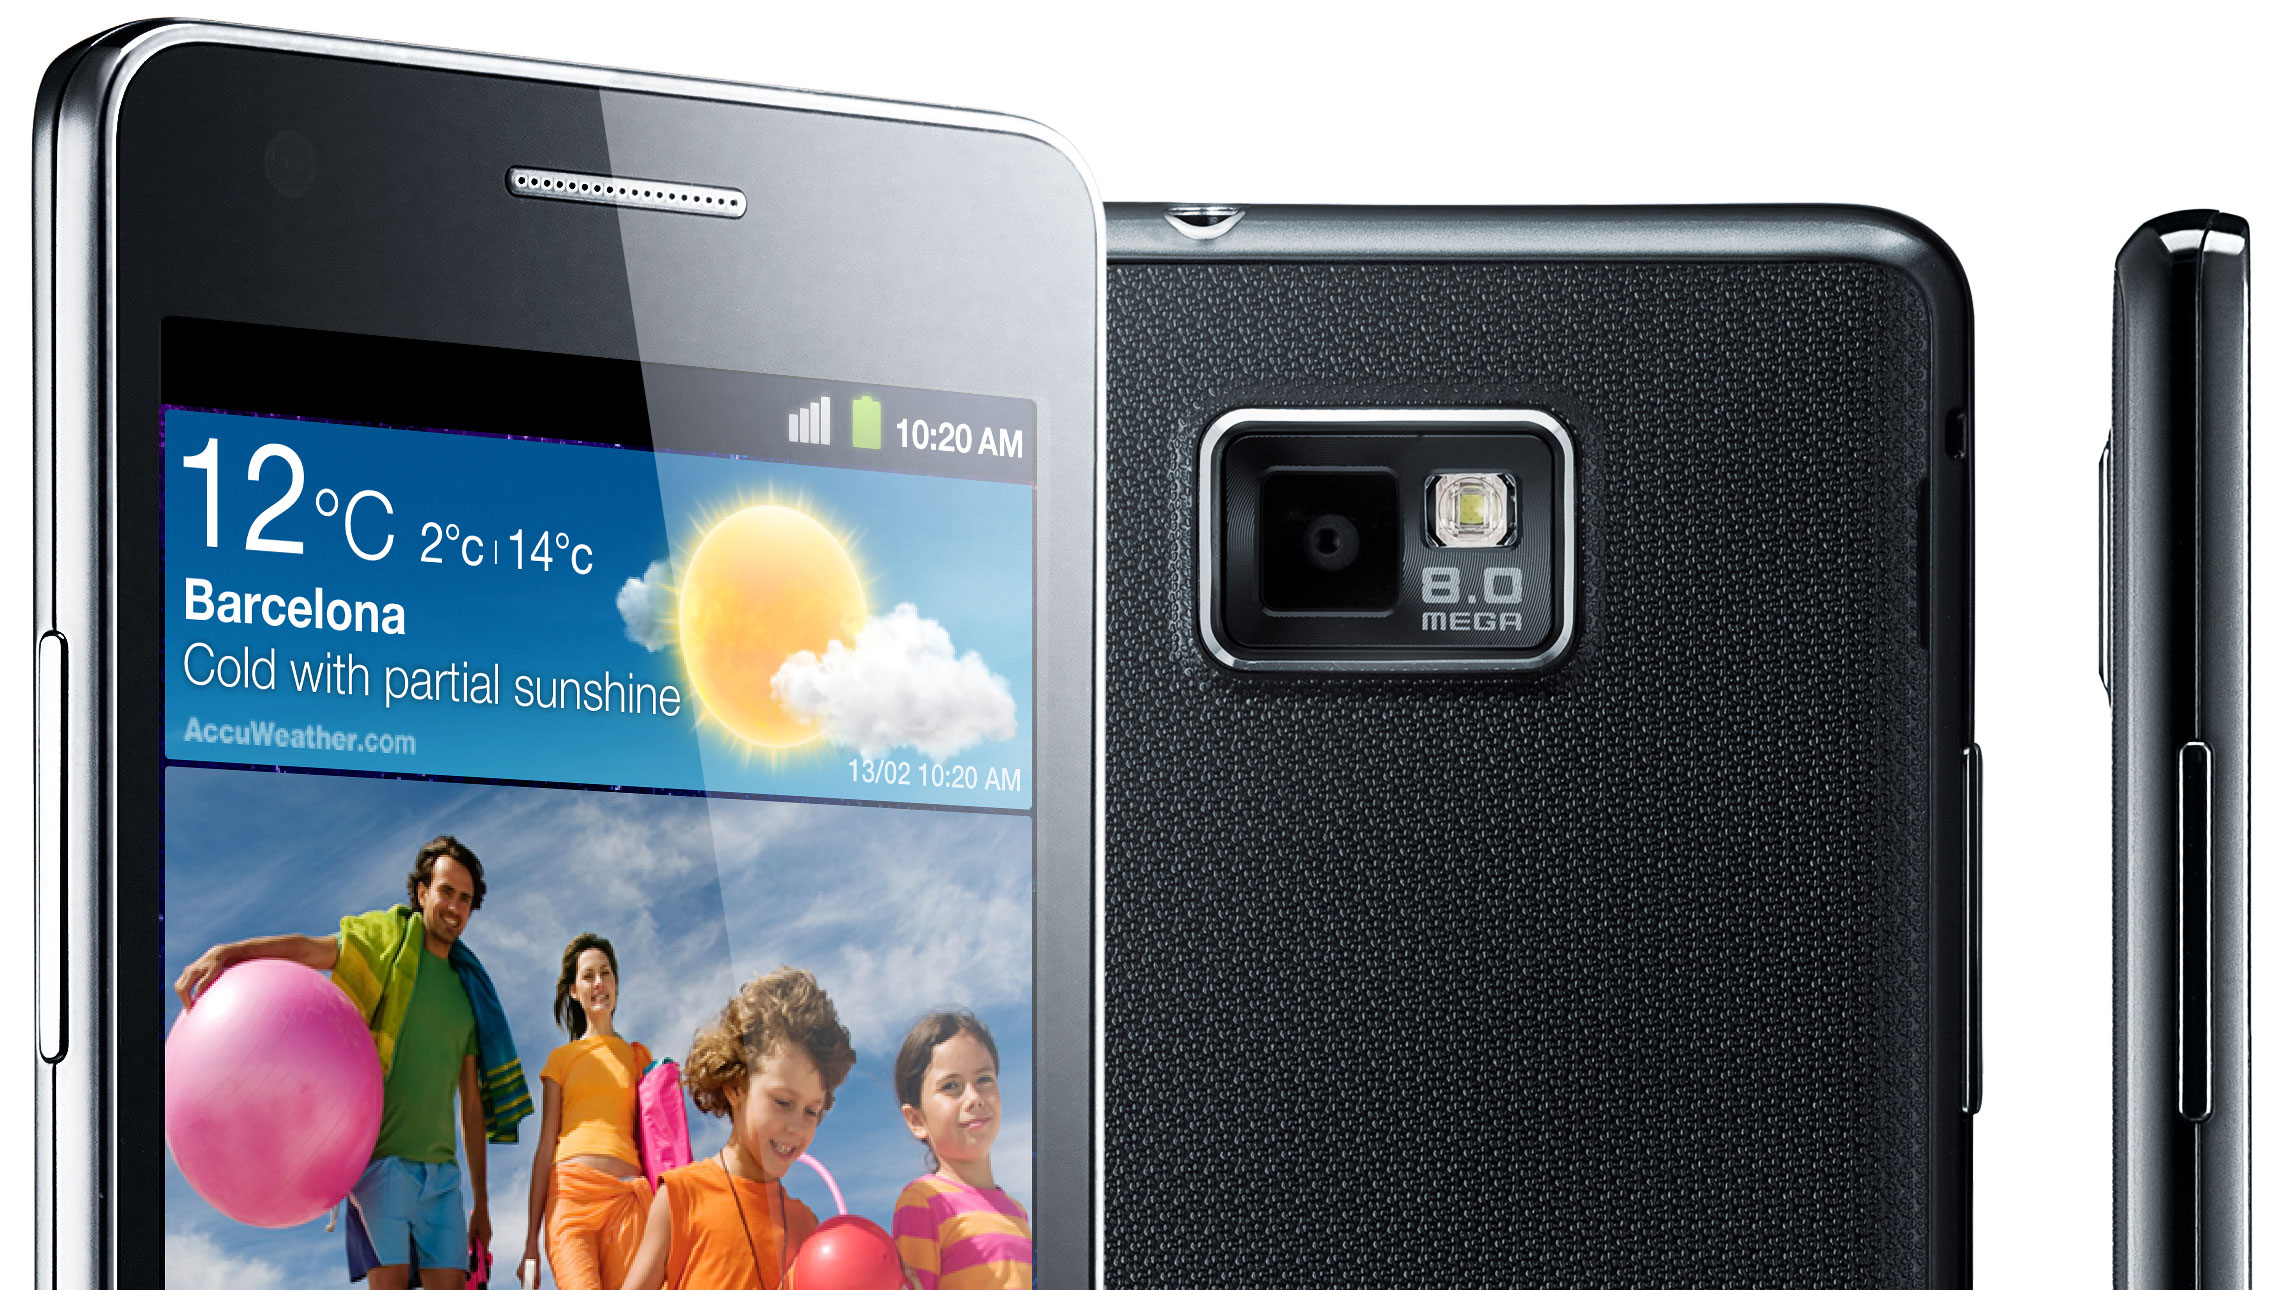 Oeganda Getalenteerd lava Samsung Galaxy S2 Plus coming in 2013? | TechRadar